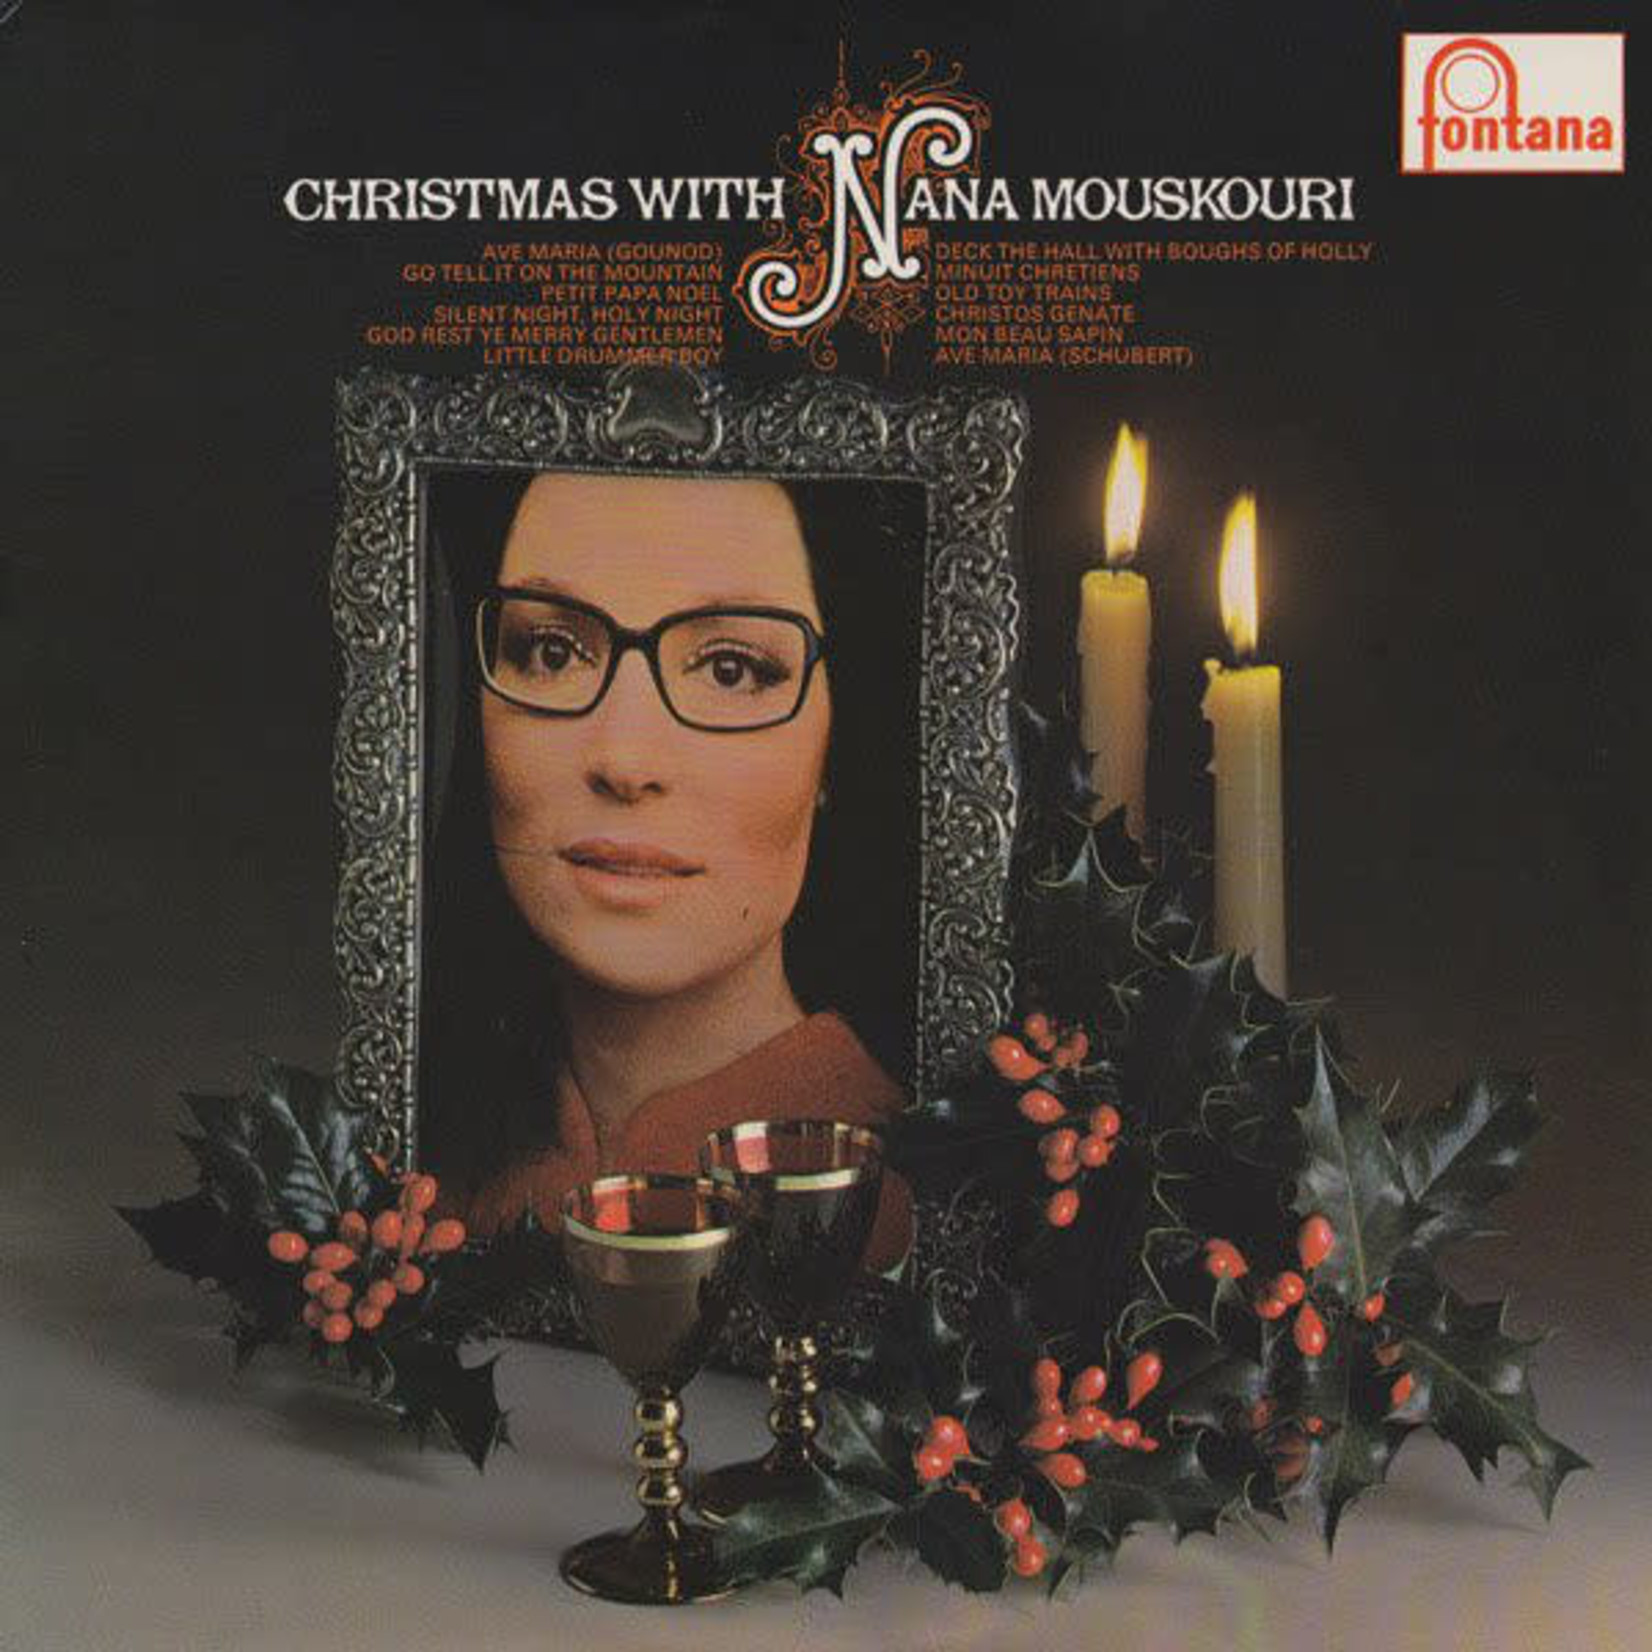 Nana Mouskouri Nana Mouskouri – Christmas With Nana Mouskouri (VG, 1972, LP, Fontana – 6312-033)